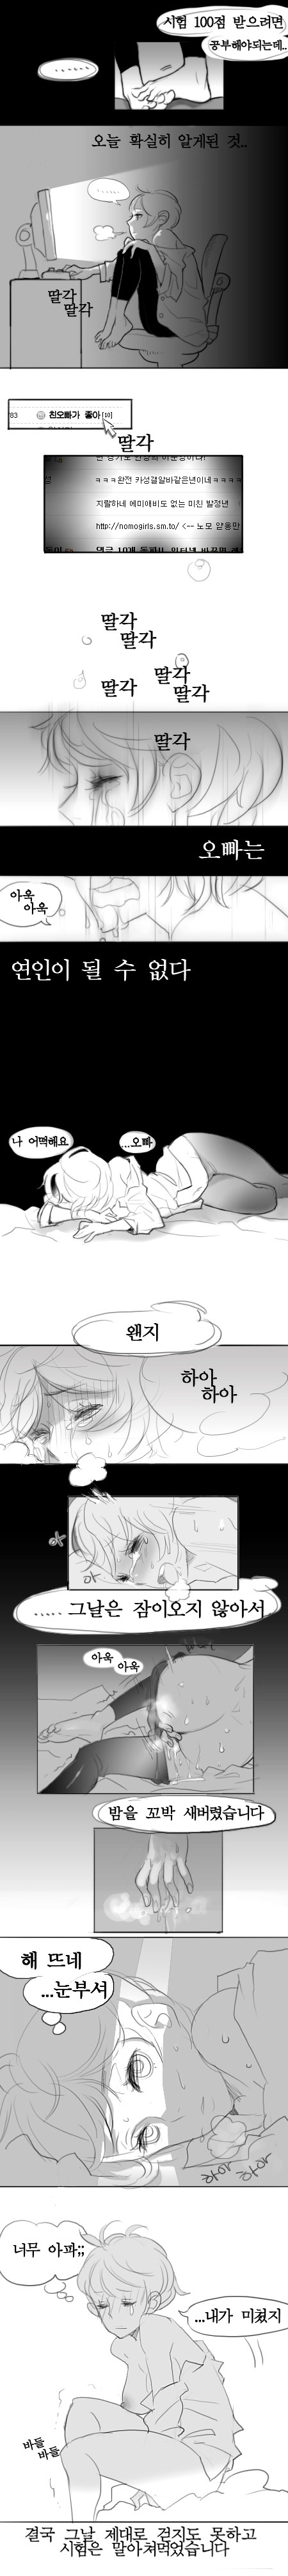 [(asdf)] Oh nan-hee - Chapter 1 [ㅁㄴㅇㄹ] 오난희 - 1부